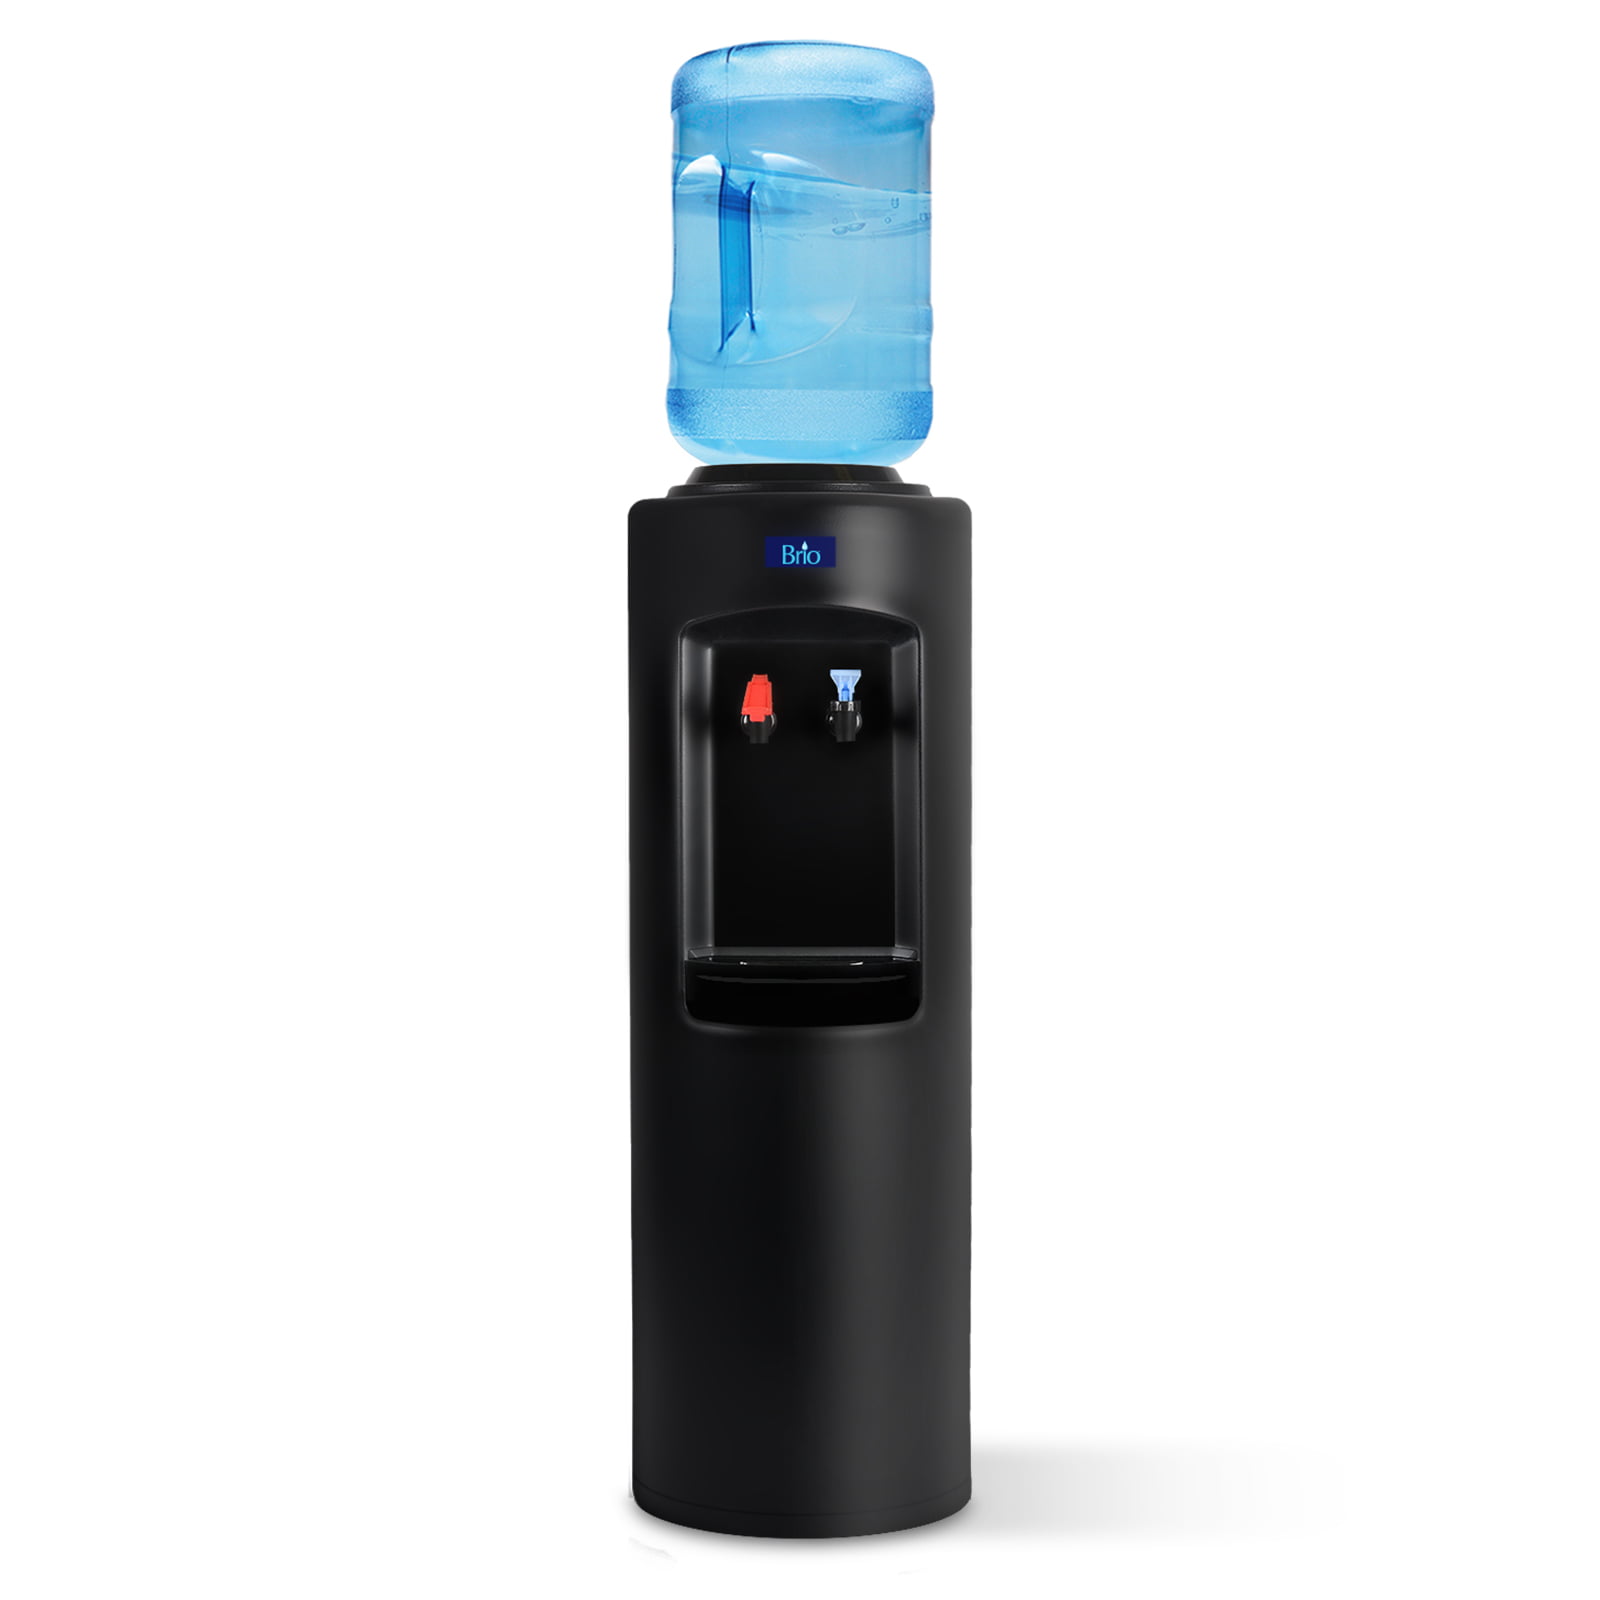 Brio Water Coolers | Best Water Dispenser & Water Filter | Sale 15% Off